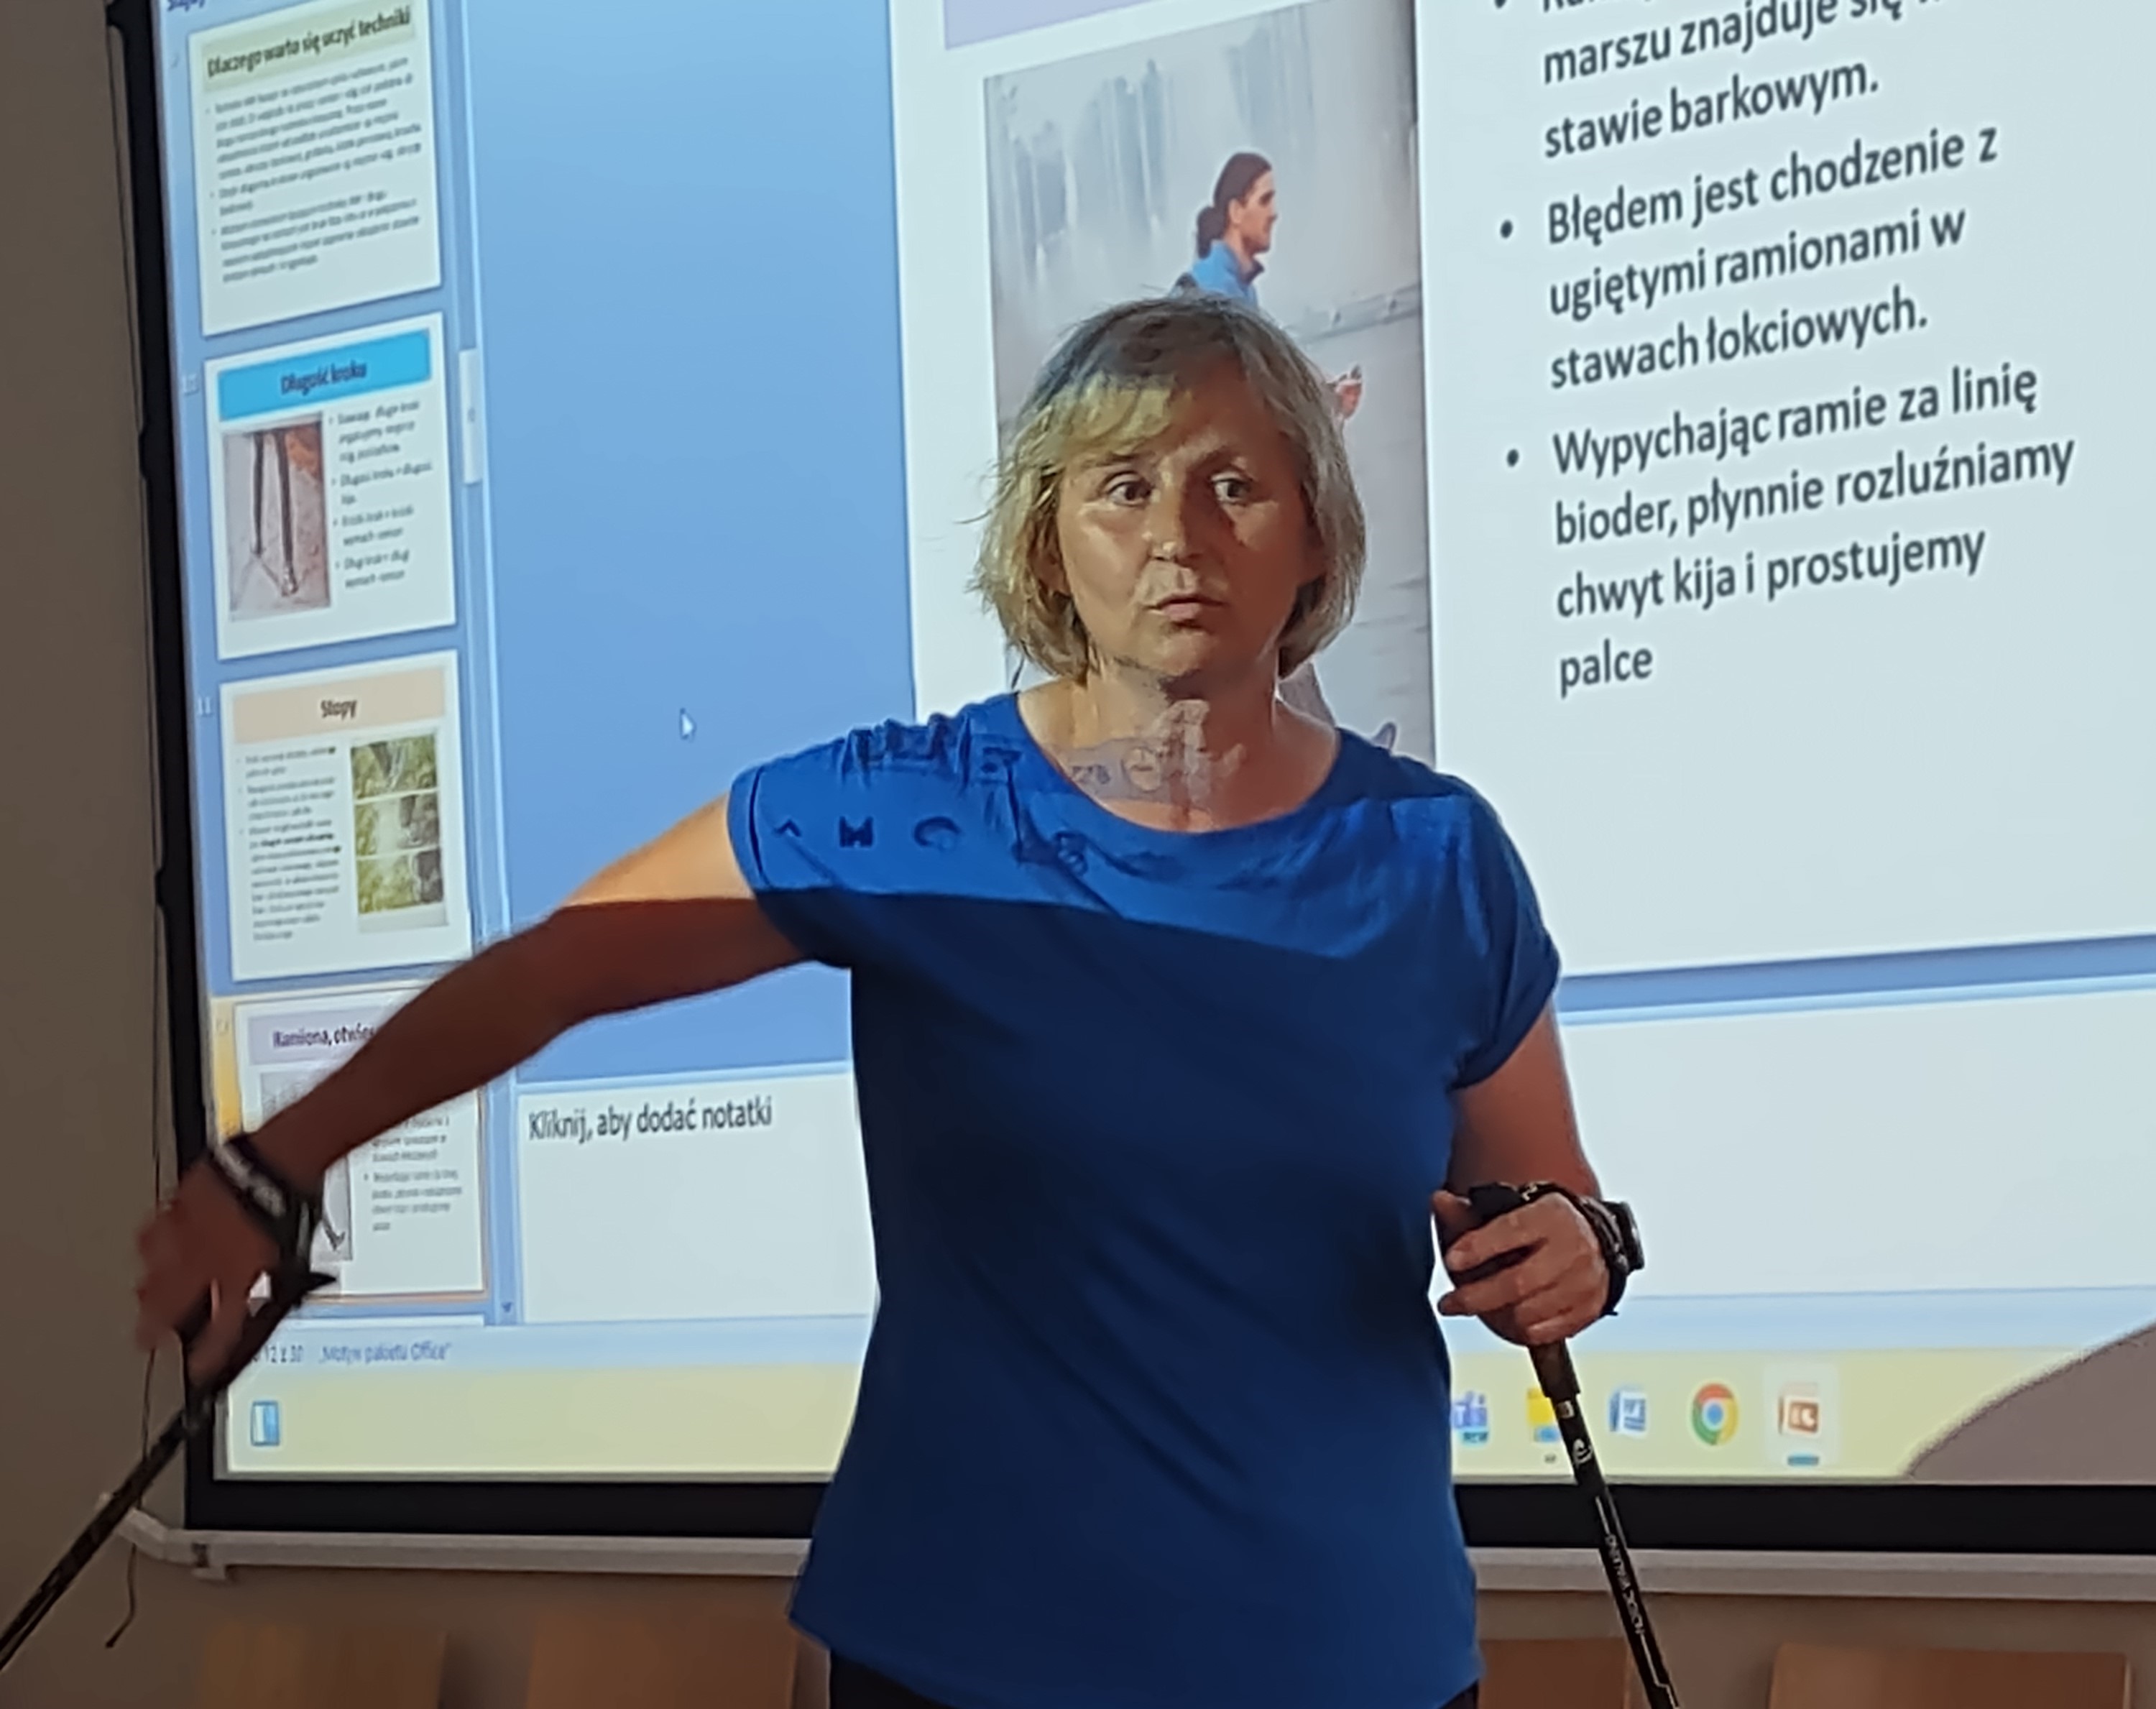 Instruktor Maria Smolarska prowadzi prelekcję na temat nordic walking.